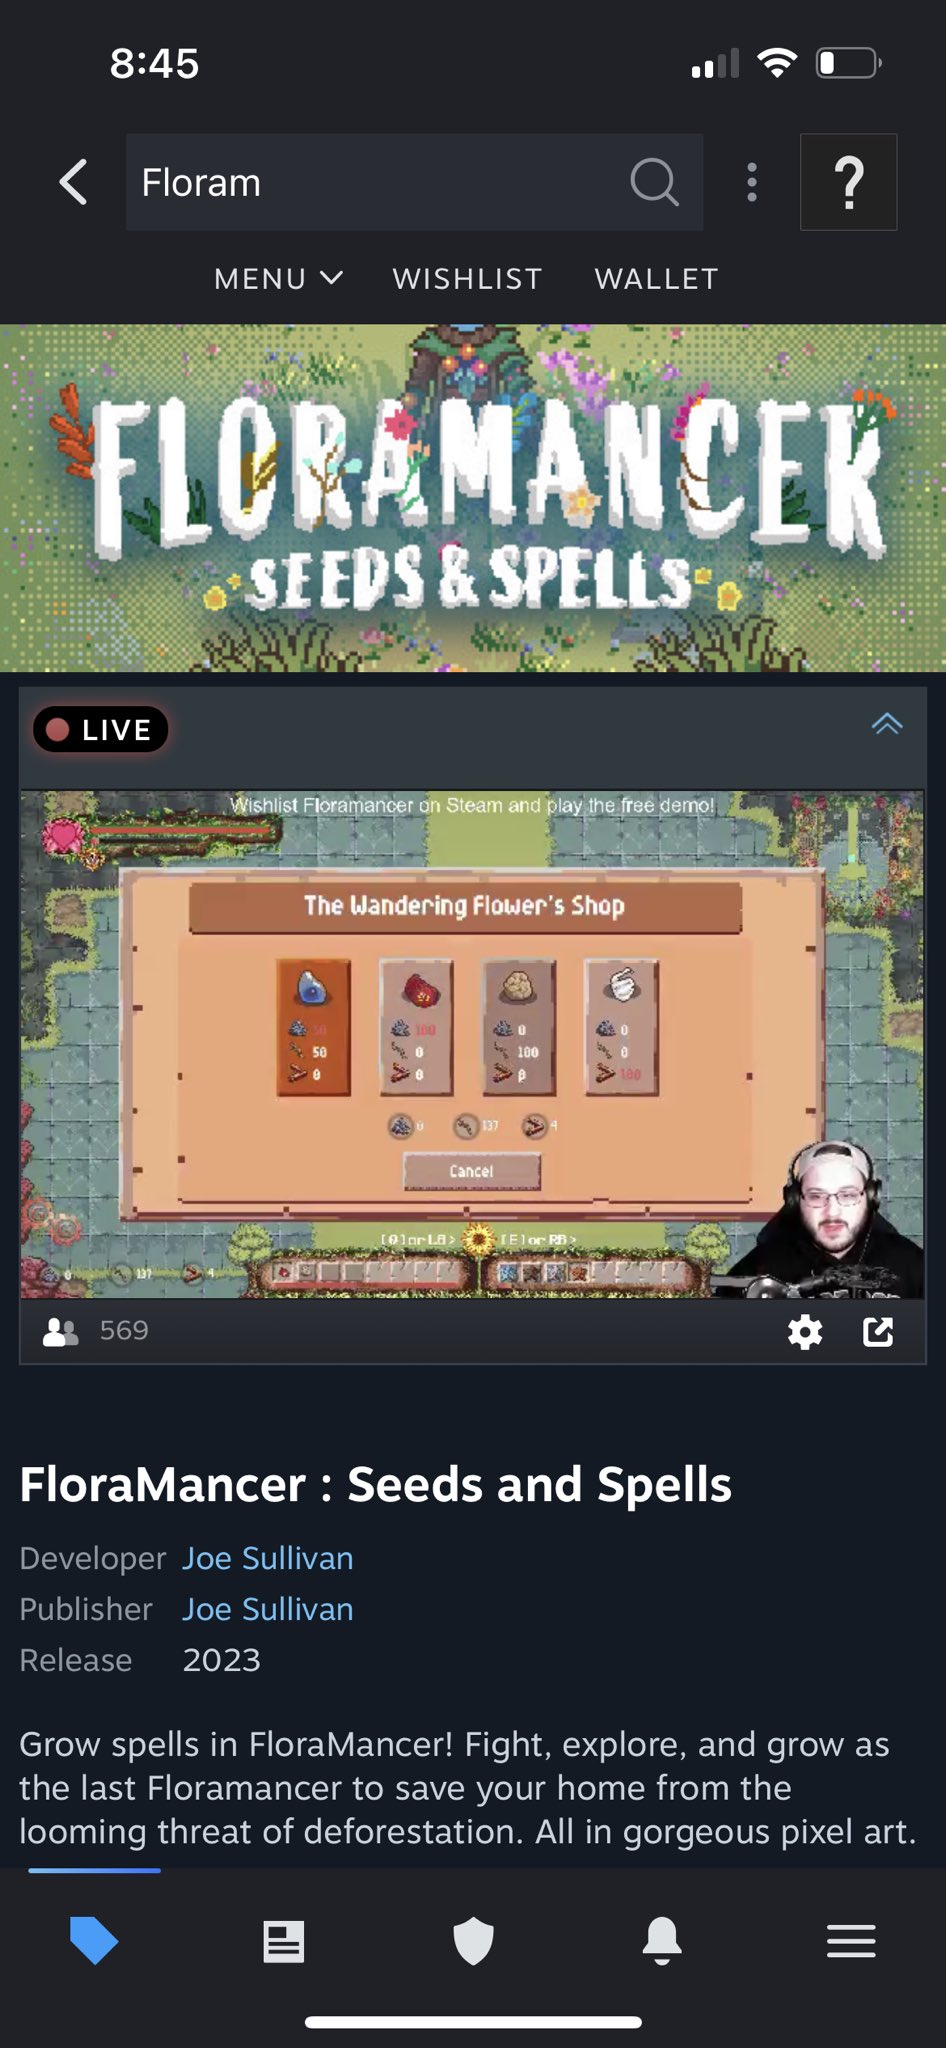 FloraMancer : Seeds and Spells on Steam